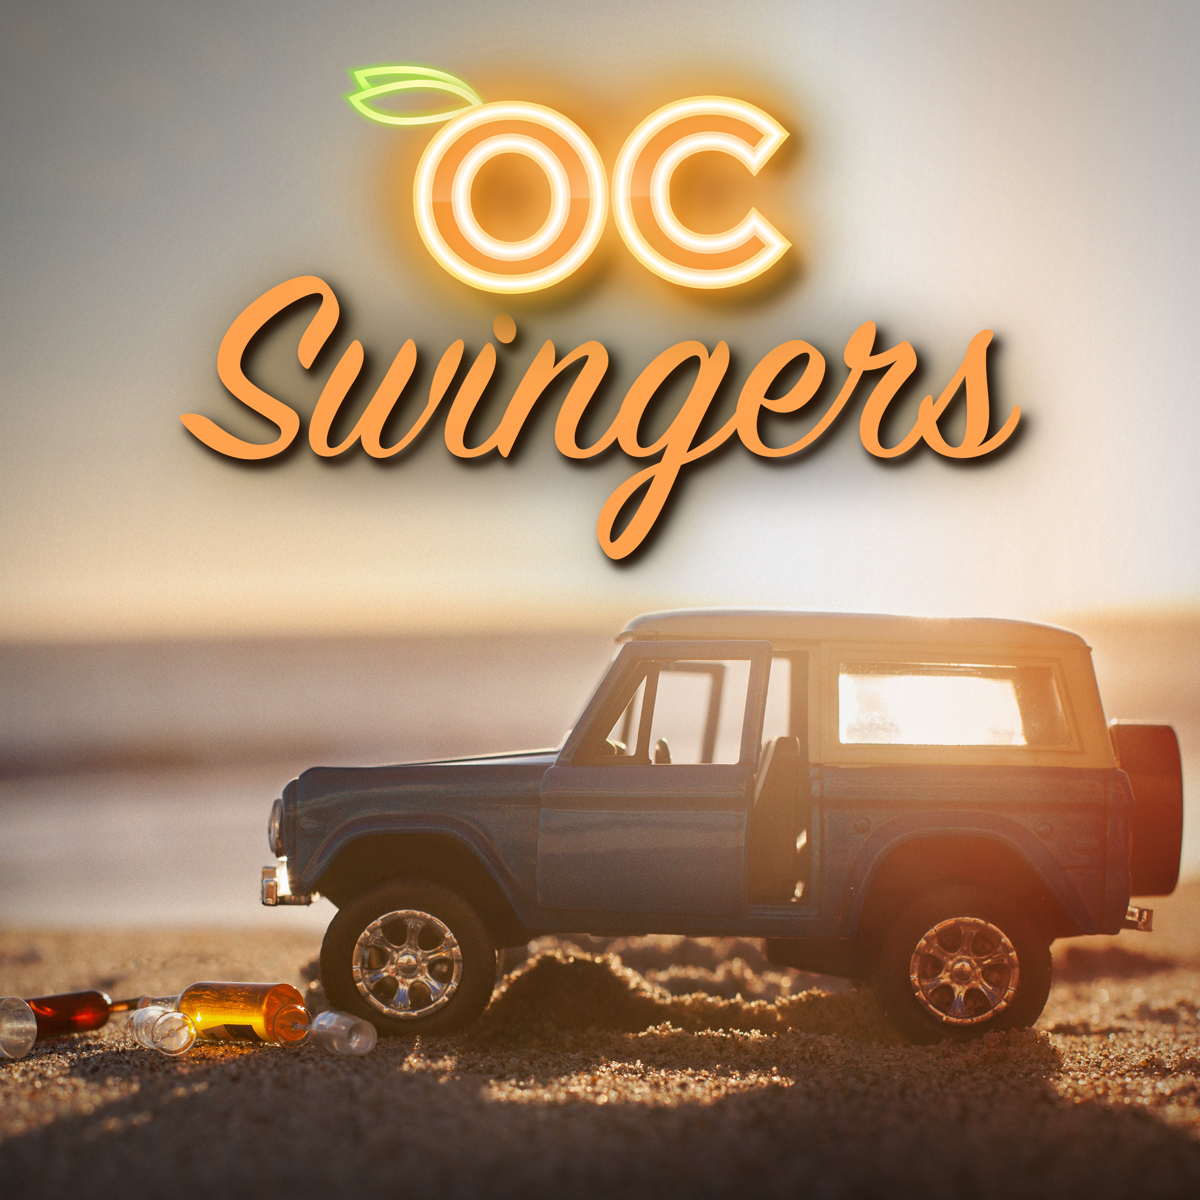 OC+Swingers